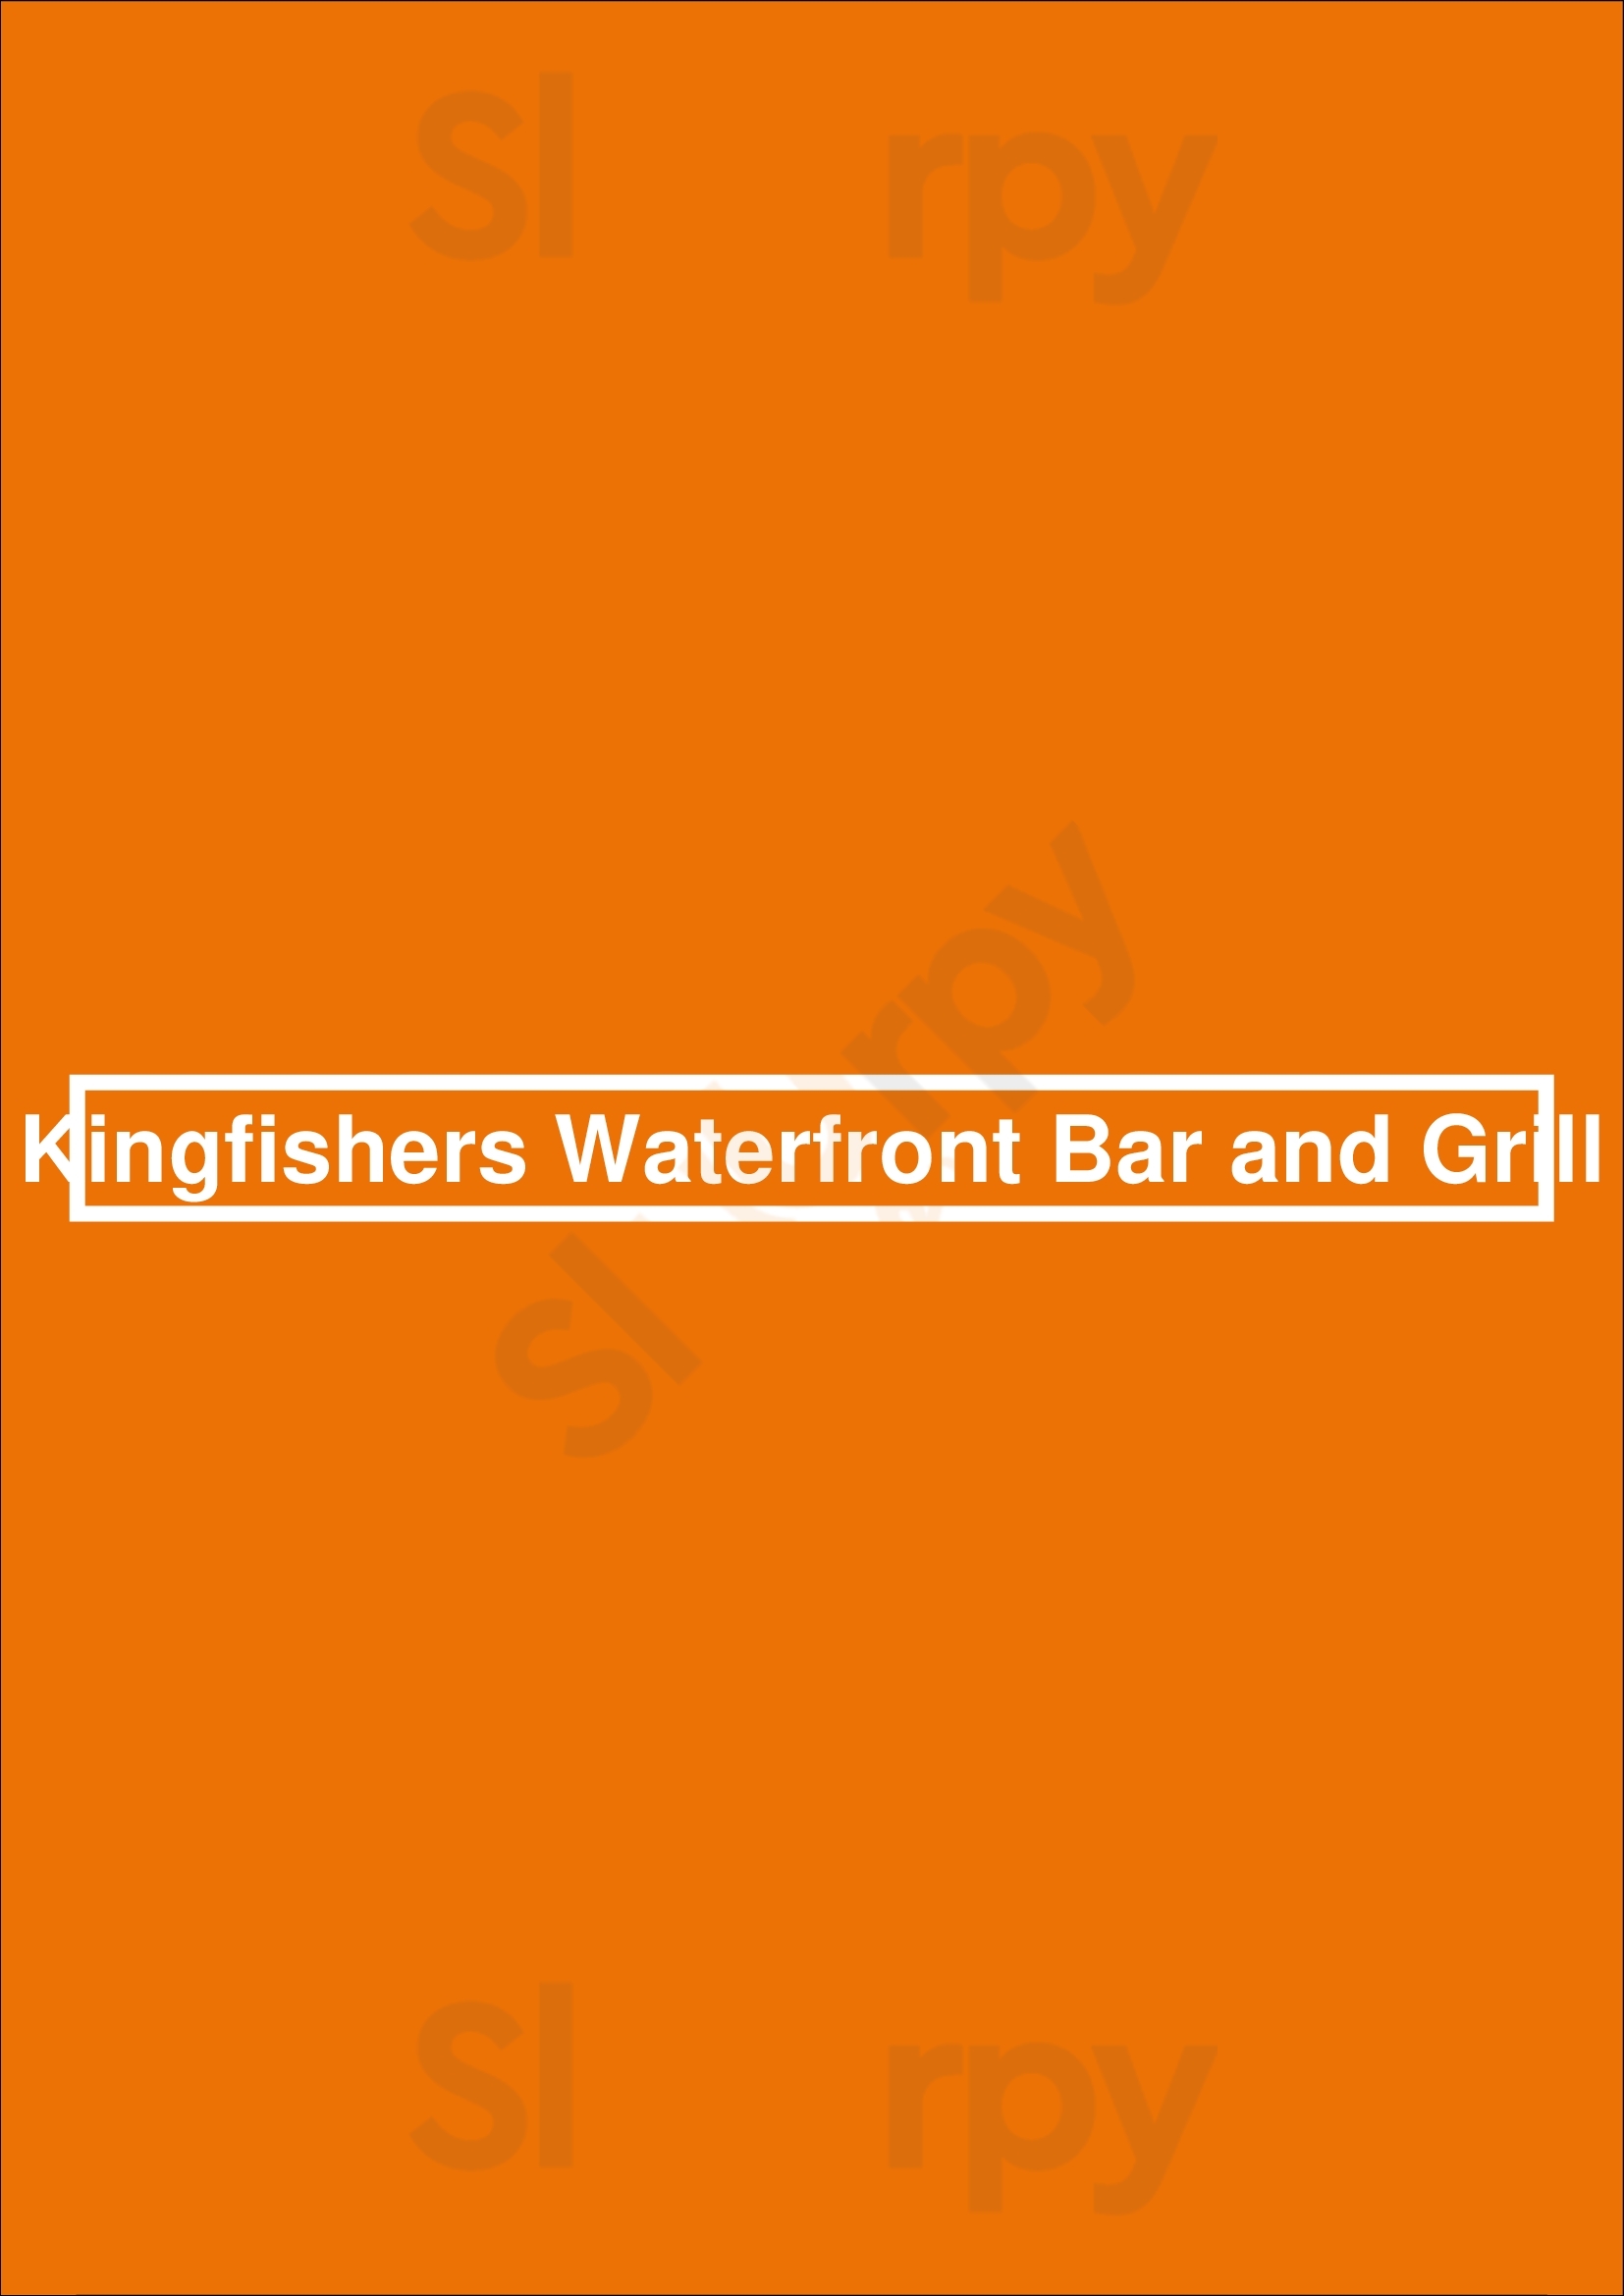 Kingfishers Waterfront Bar And Grill Maple Ridge Menu - 1